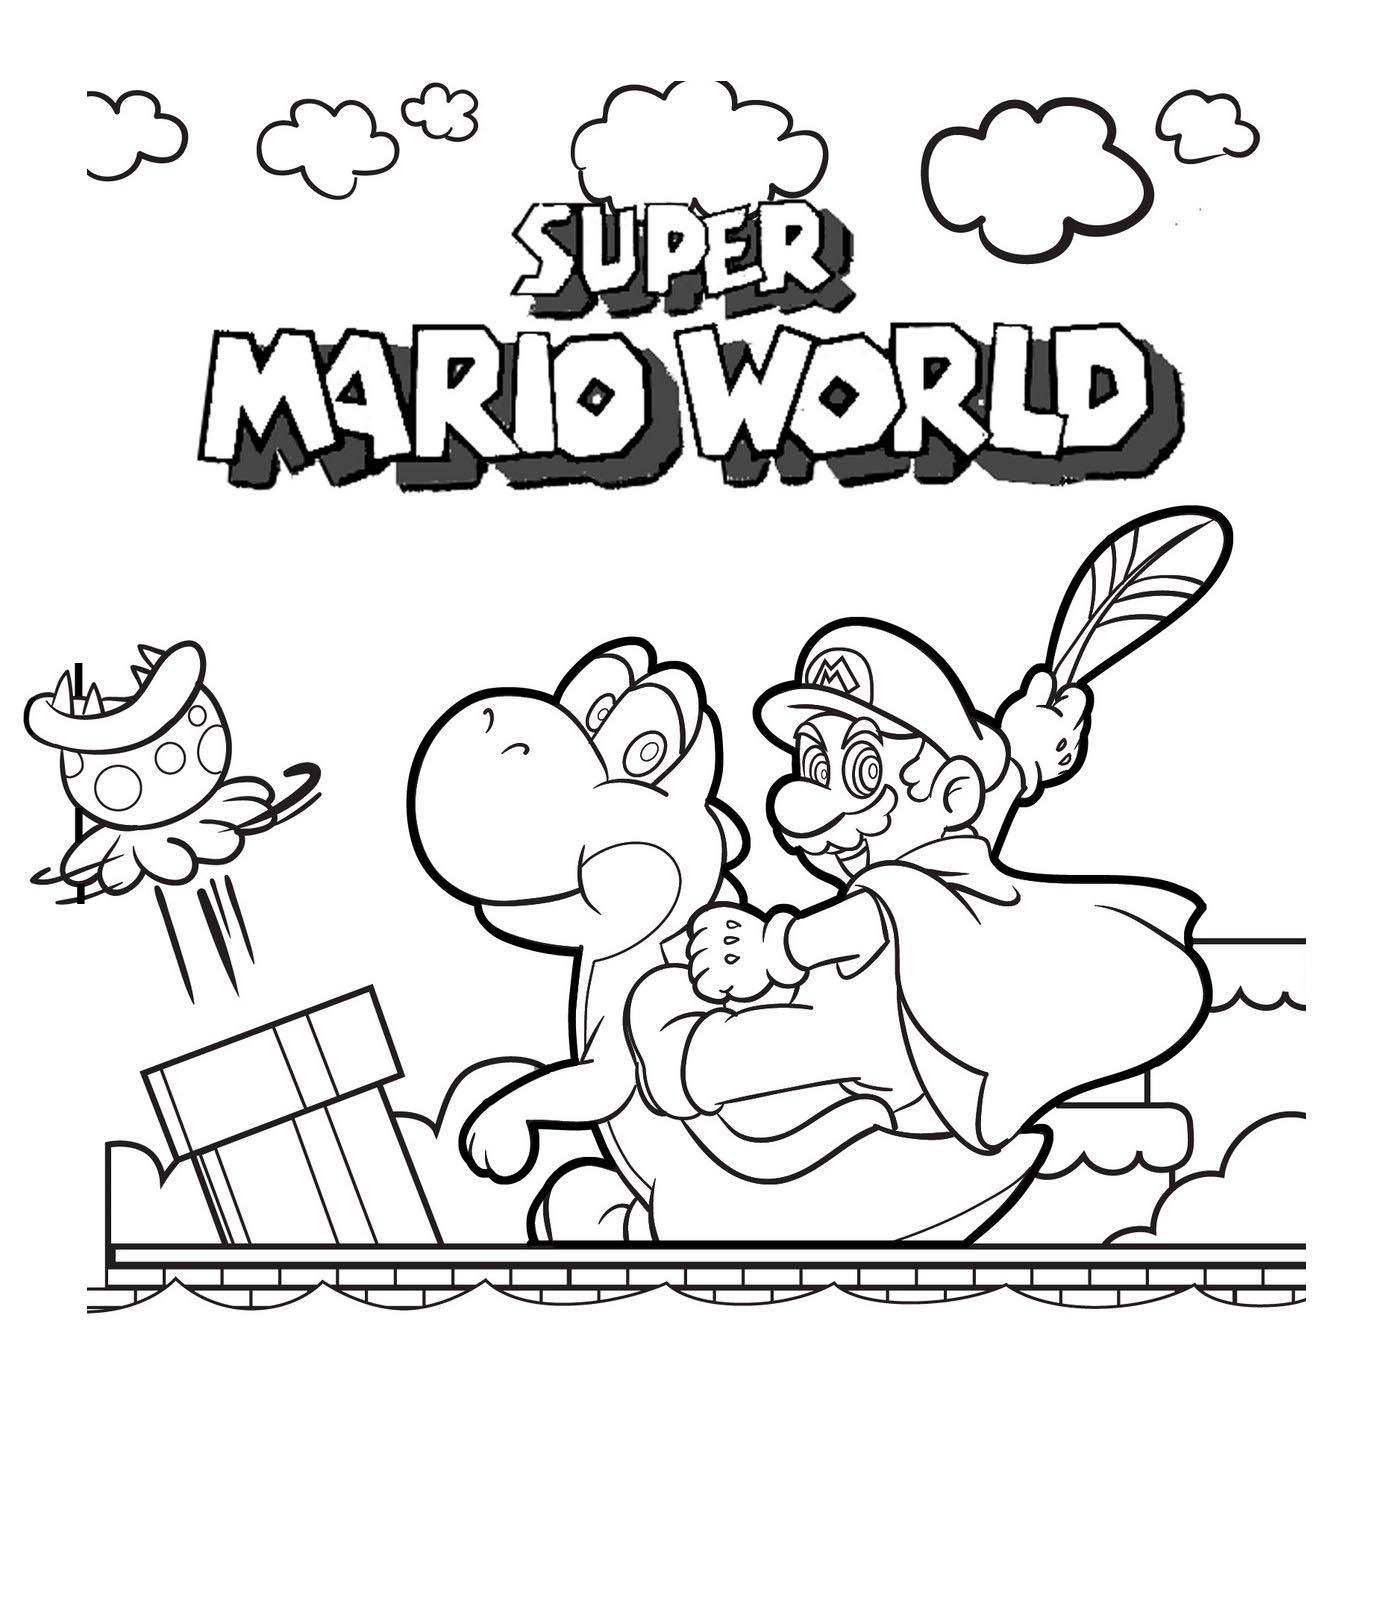 Coloring Super Mario. Category games. Tags:  games, super Mario.